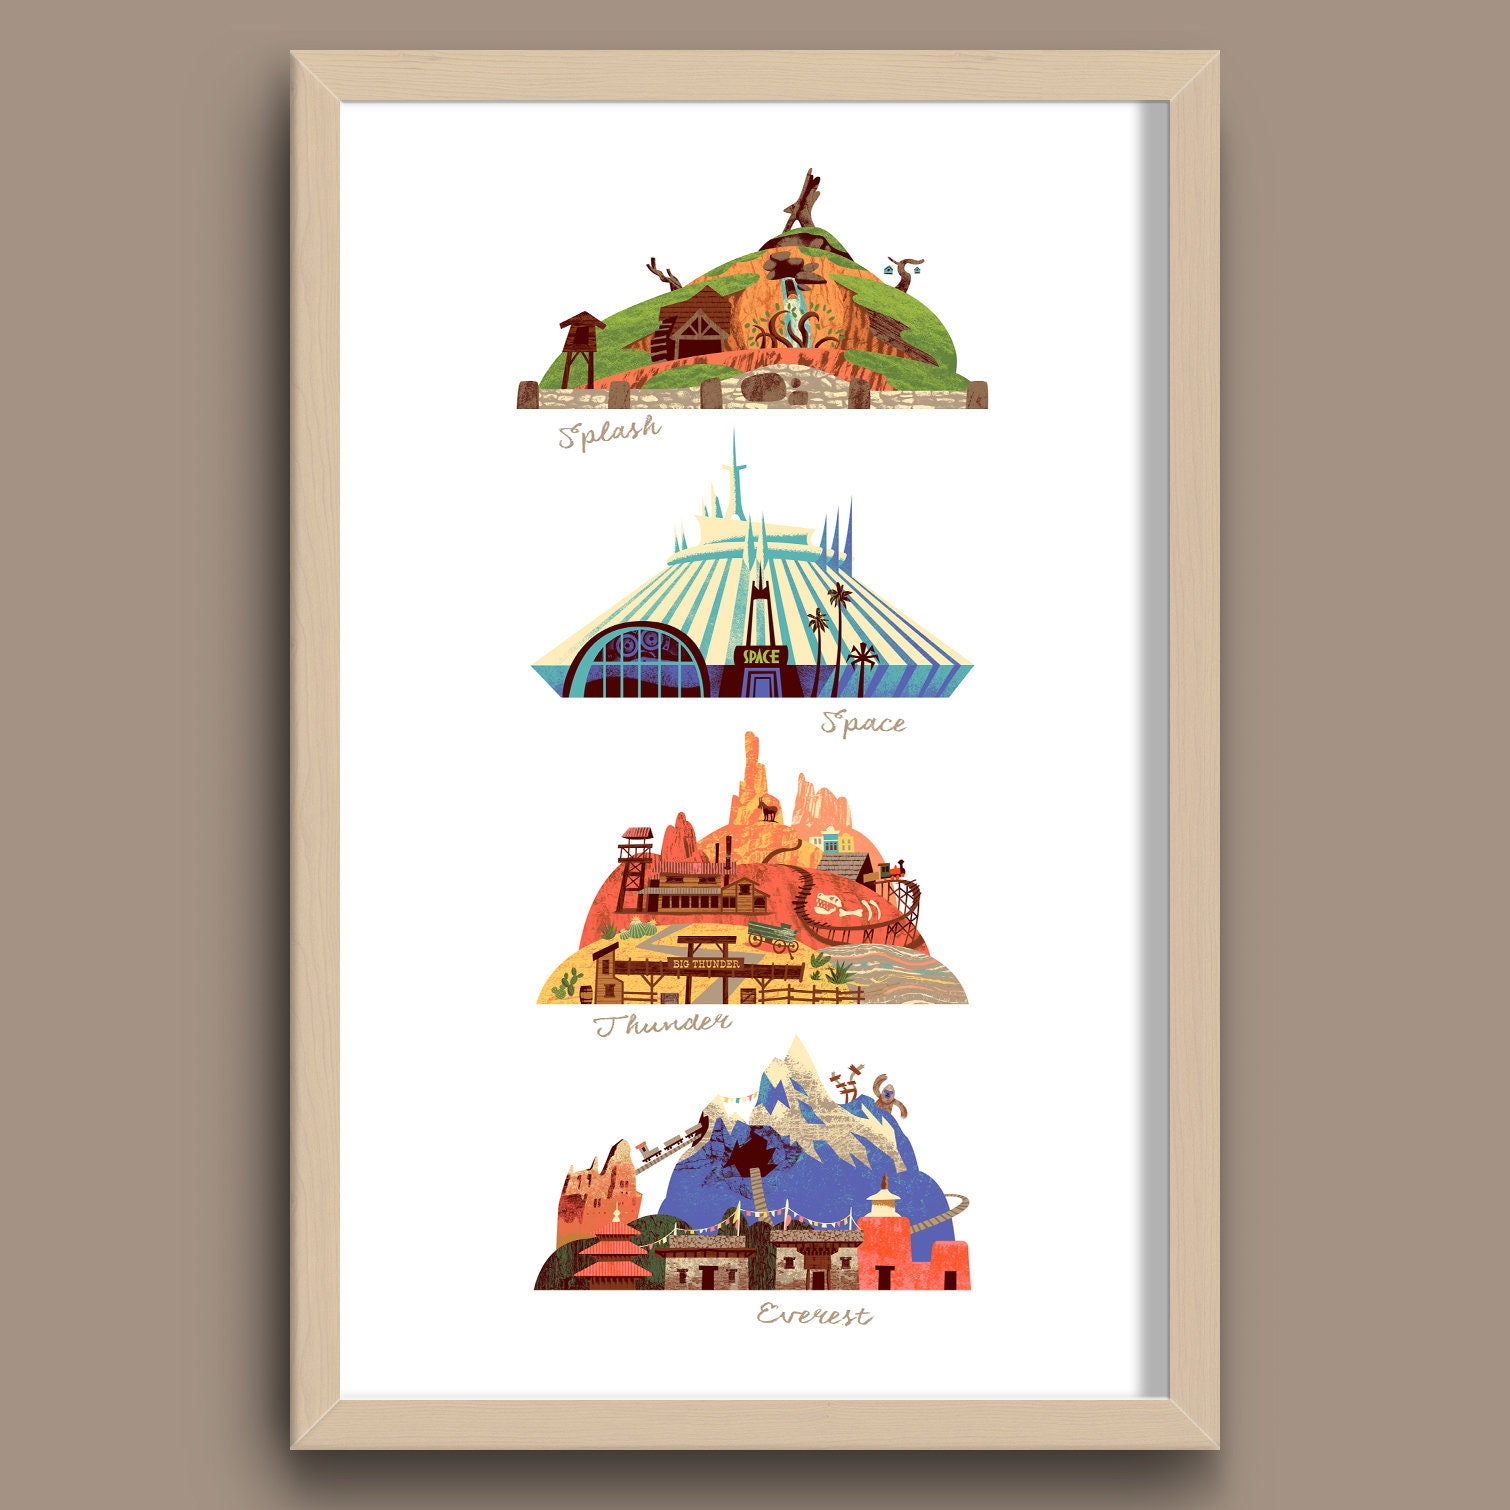 The Disney Mountains Print, Walt Disney World, Splash, Space, Big Thunder,  Everest -  Canada